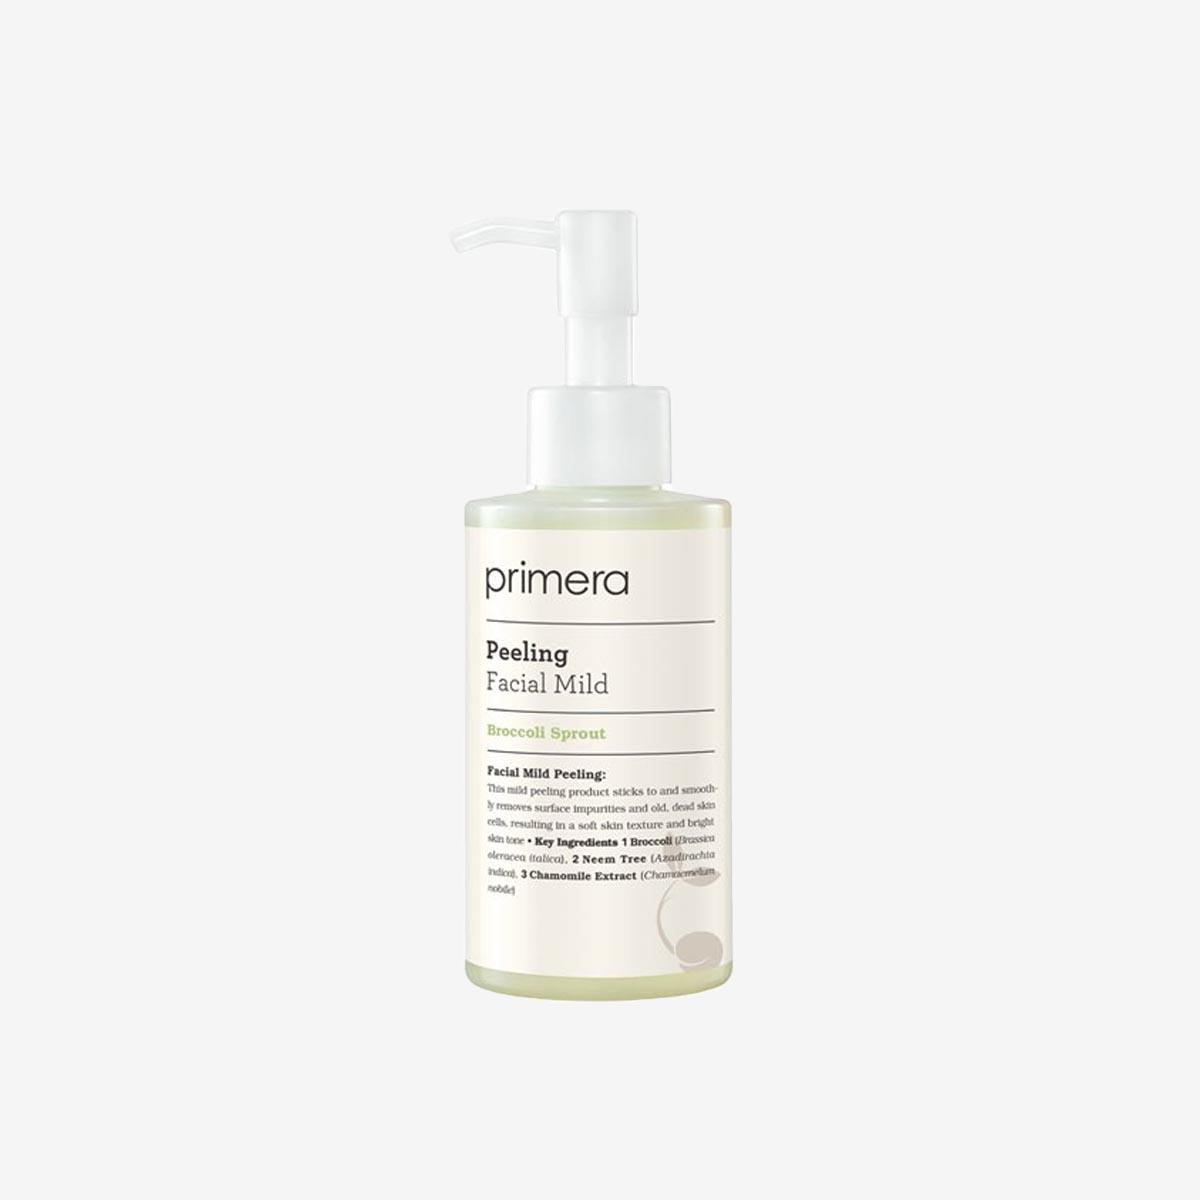 korean brand primera's mild facial peeling gel bottle with pump